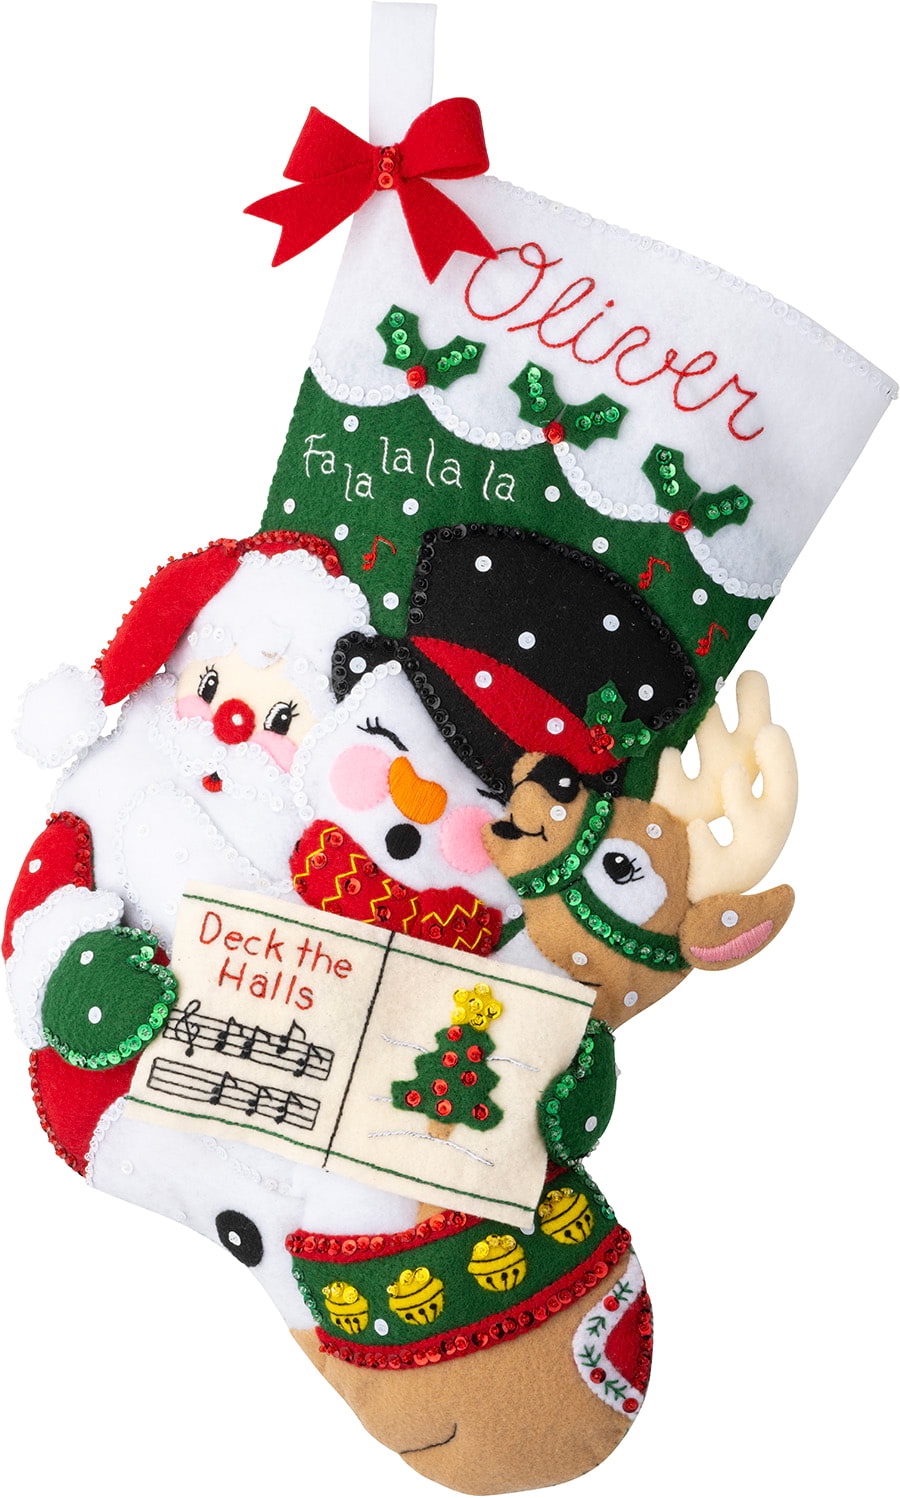 Shop Plaid Bucilla ® Seasonal - Felt - Stocking Kits - Christmas in Oz -  89246E - 89246E